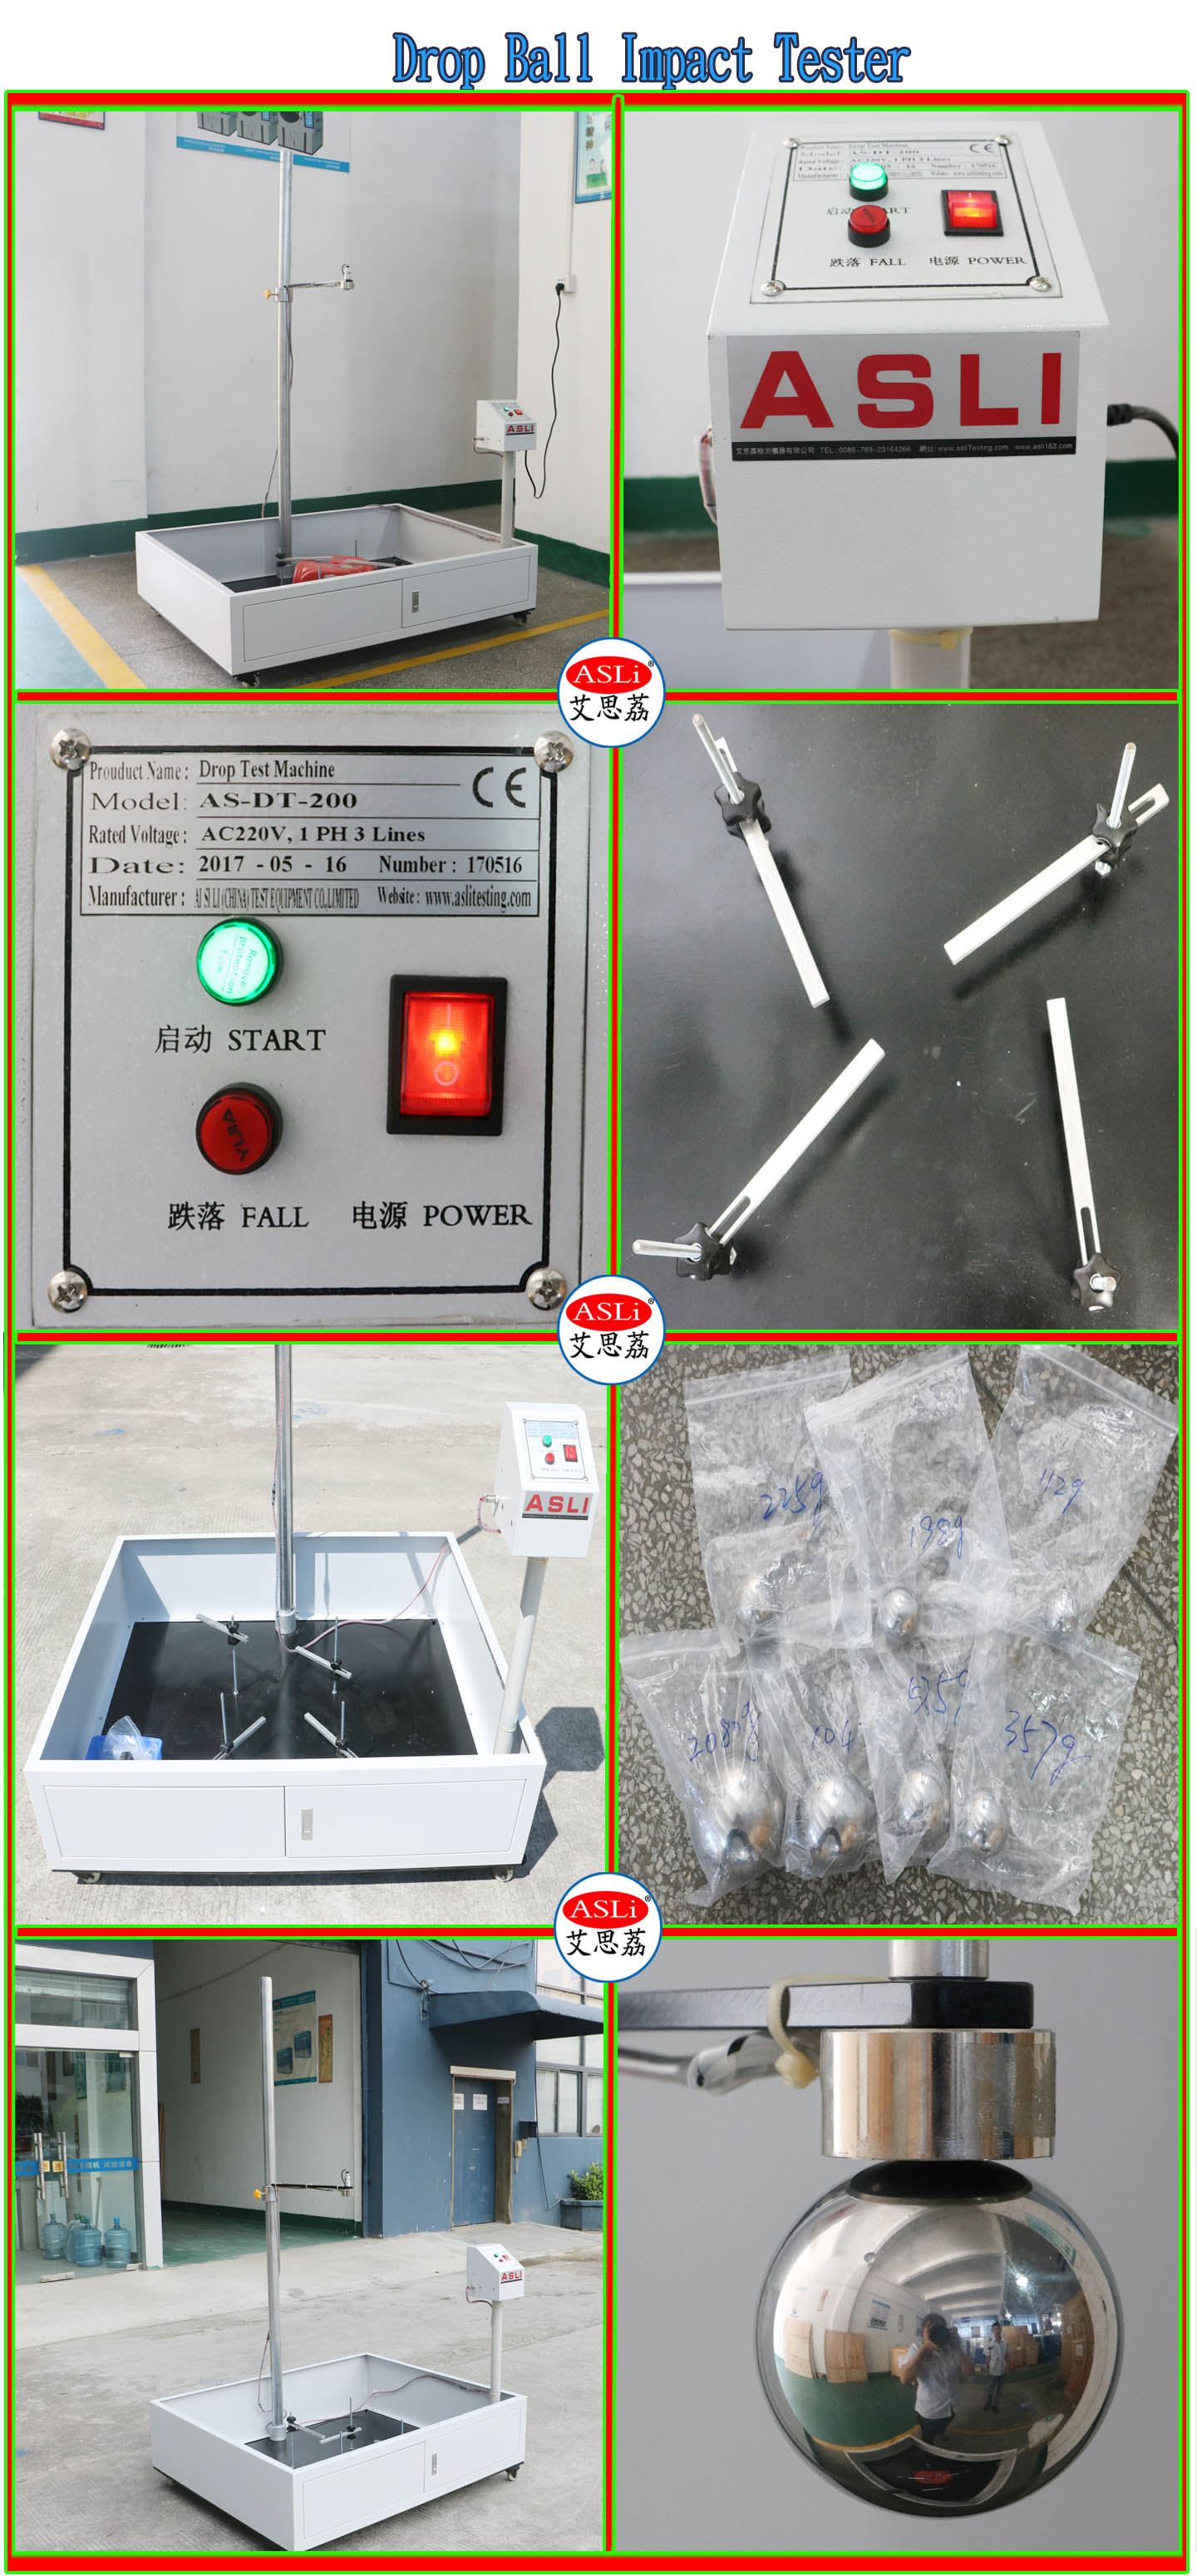 2 Meters Steel Ball Drop Test Machine with IEC 60950-1 Standard